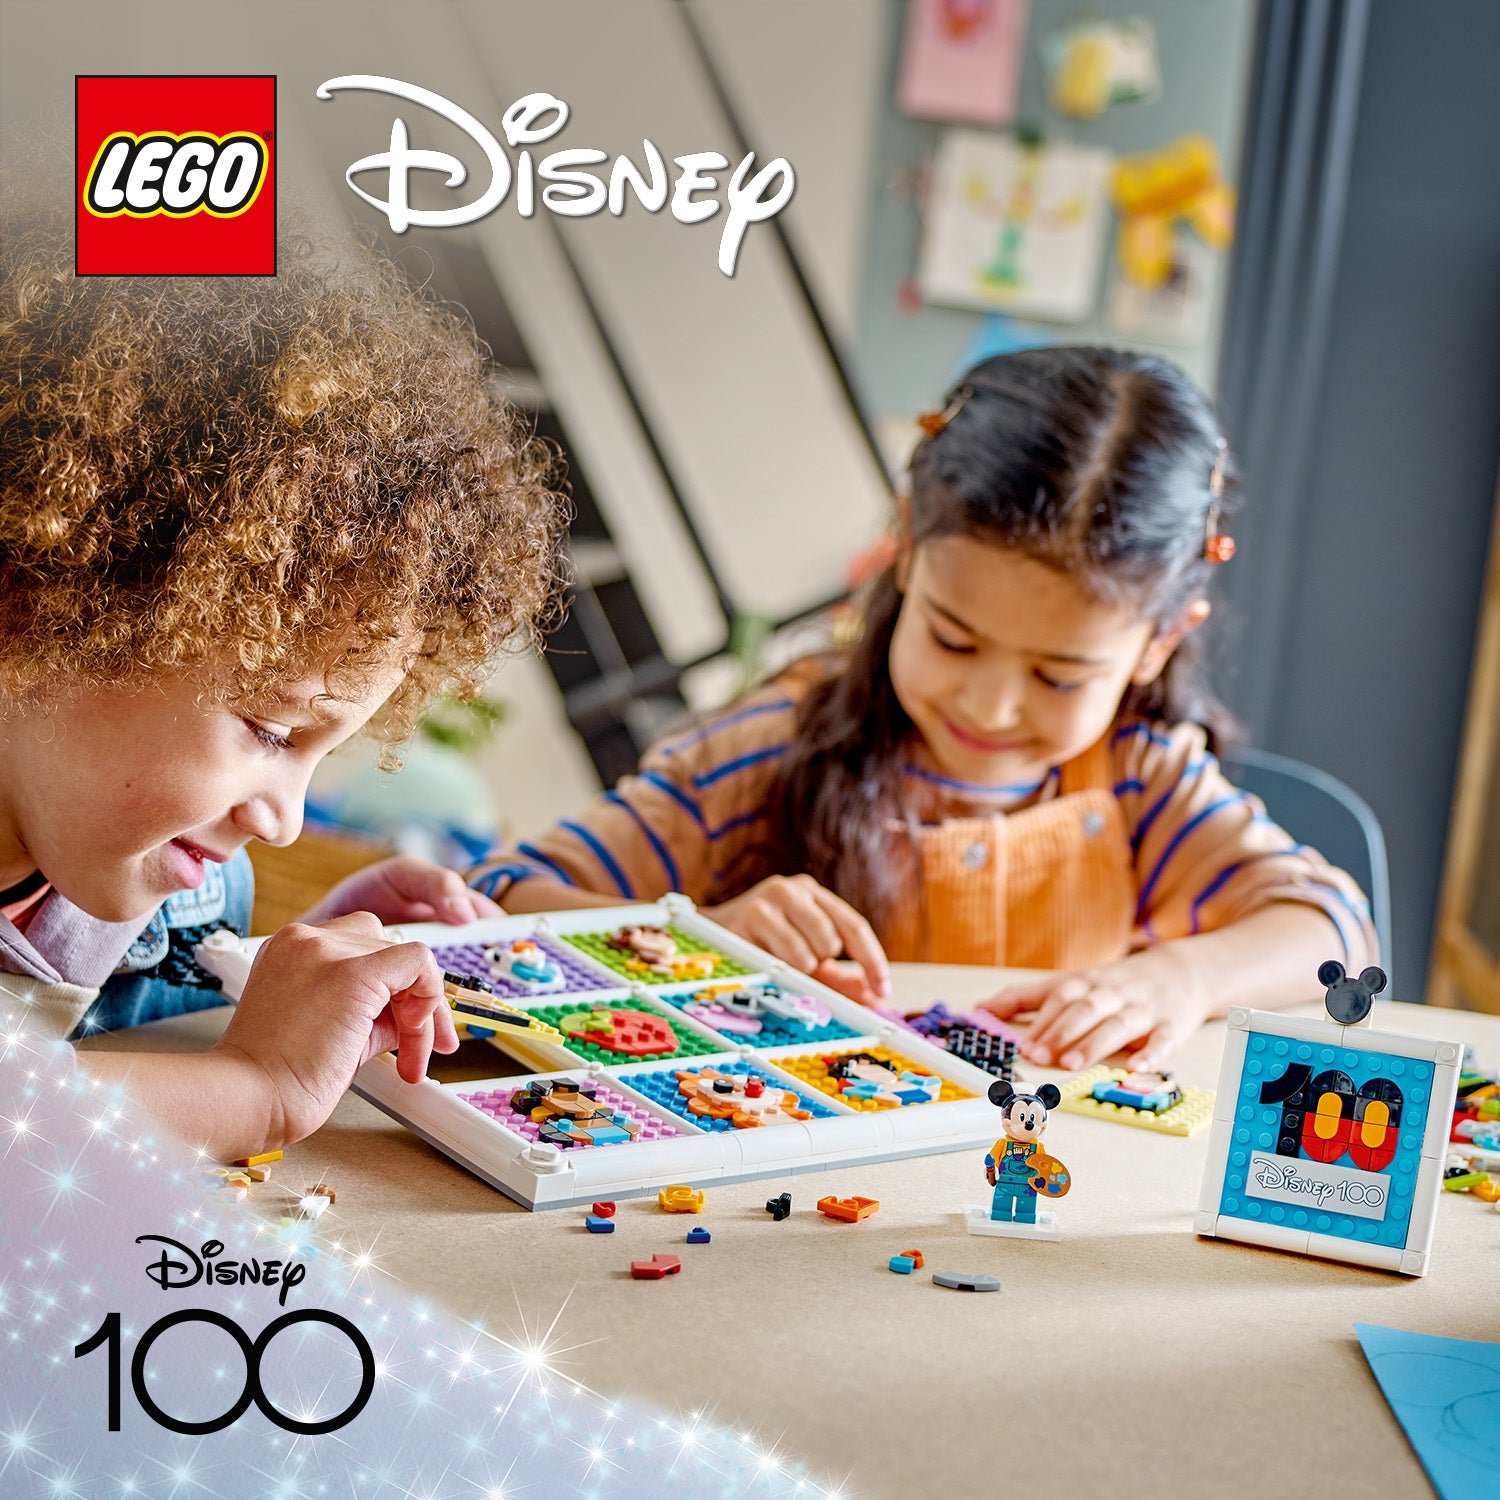 Lego 43221 100 Years of Disney Animation